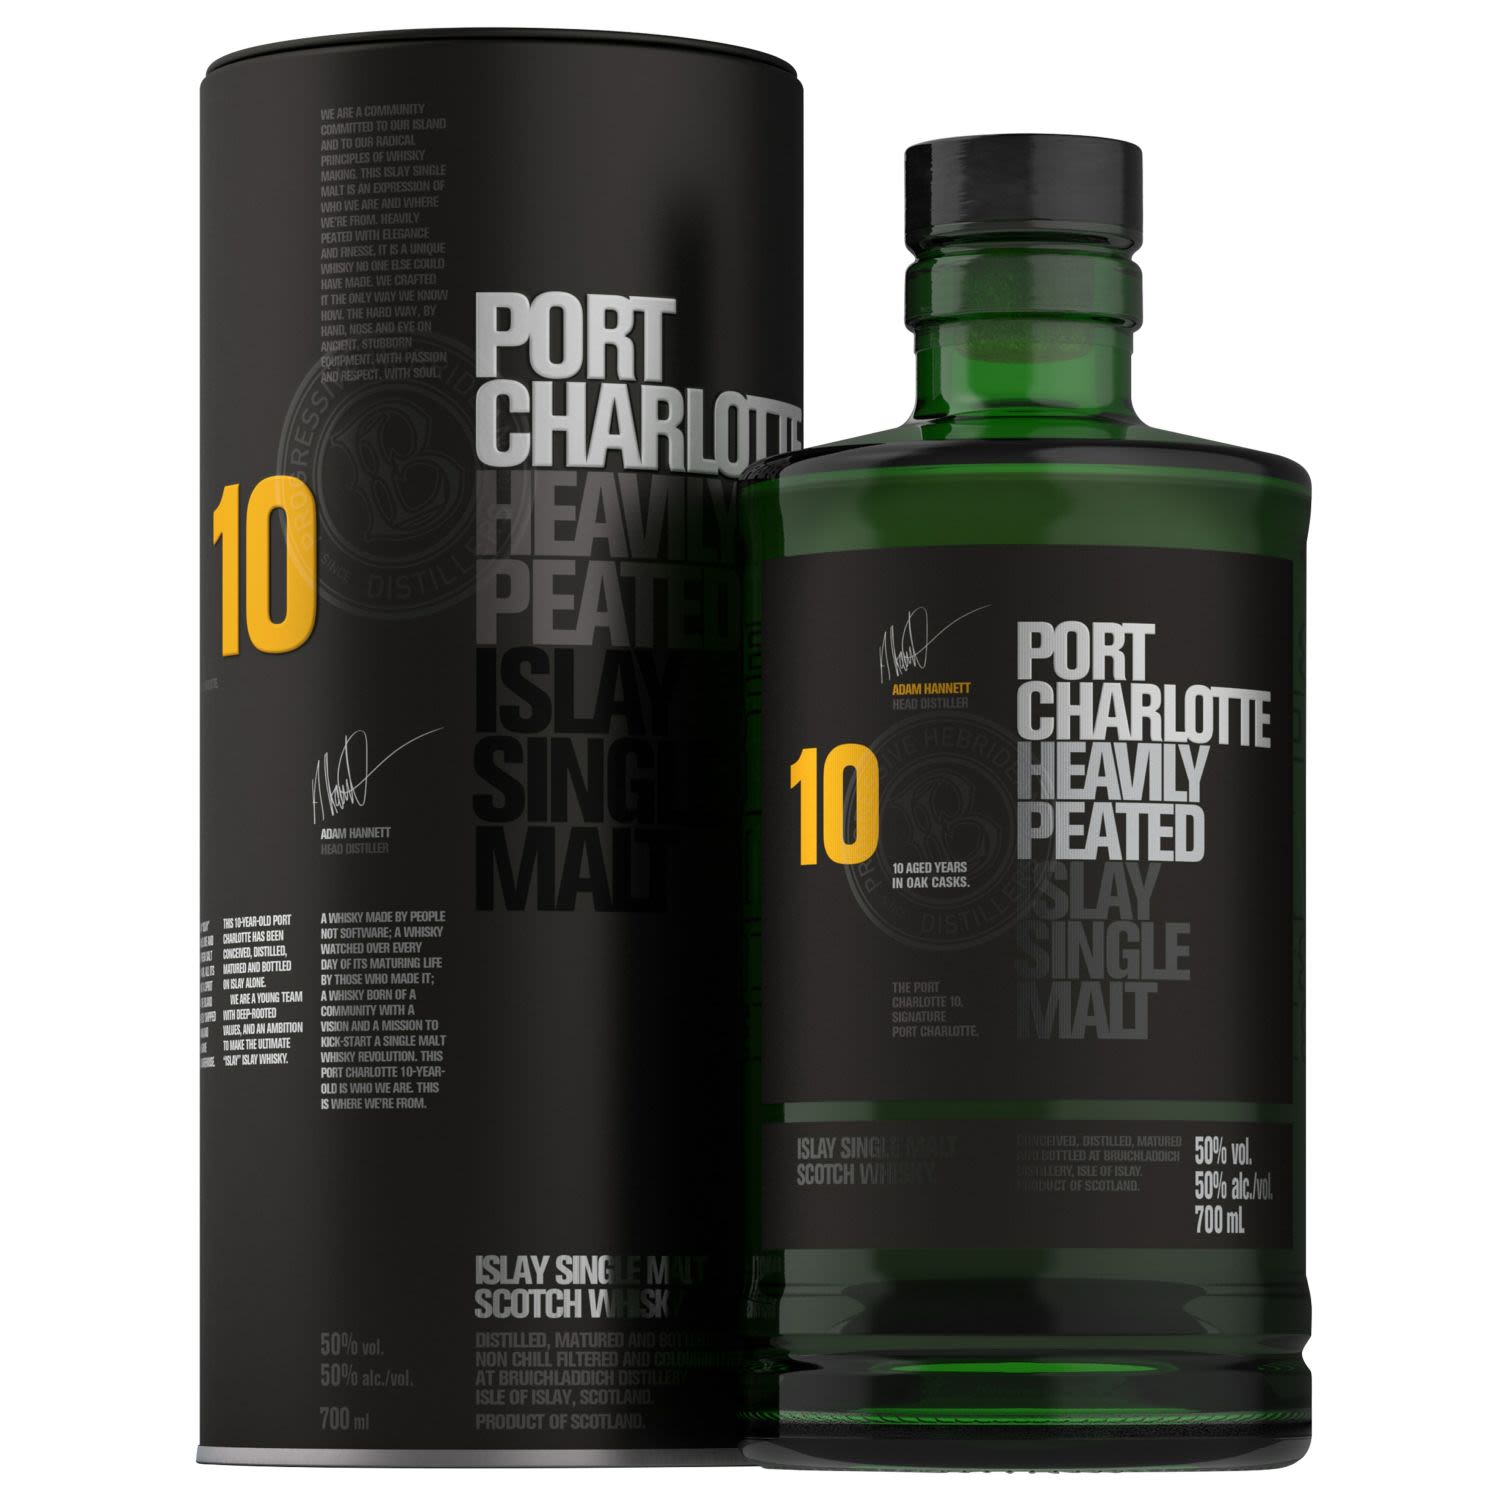 Port Charlotte "Heavily Peated" Islay Single Malt Scotch Whisky 700mL Bottle